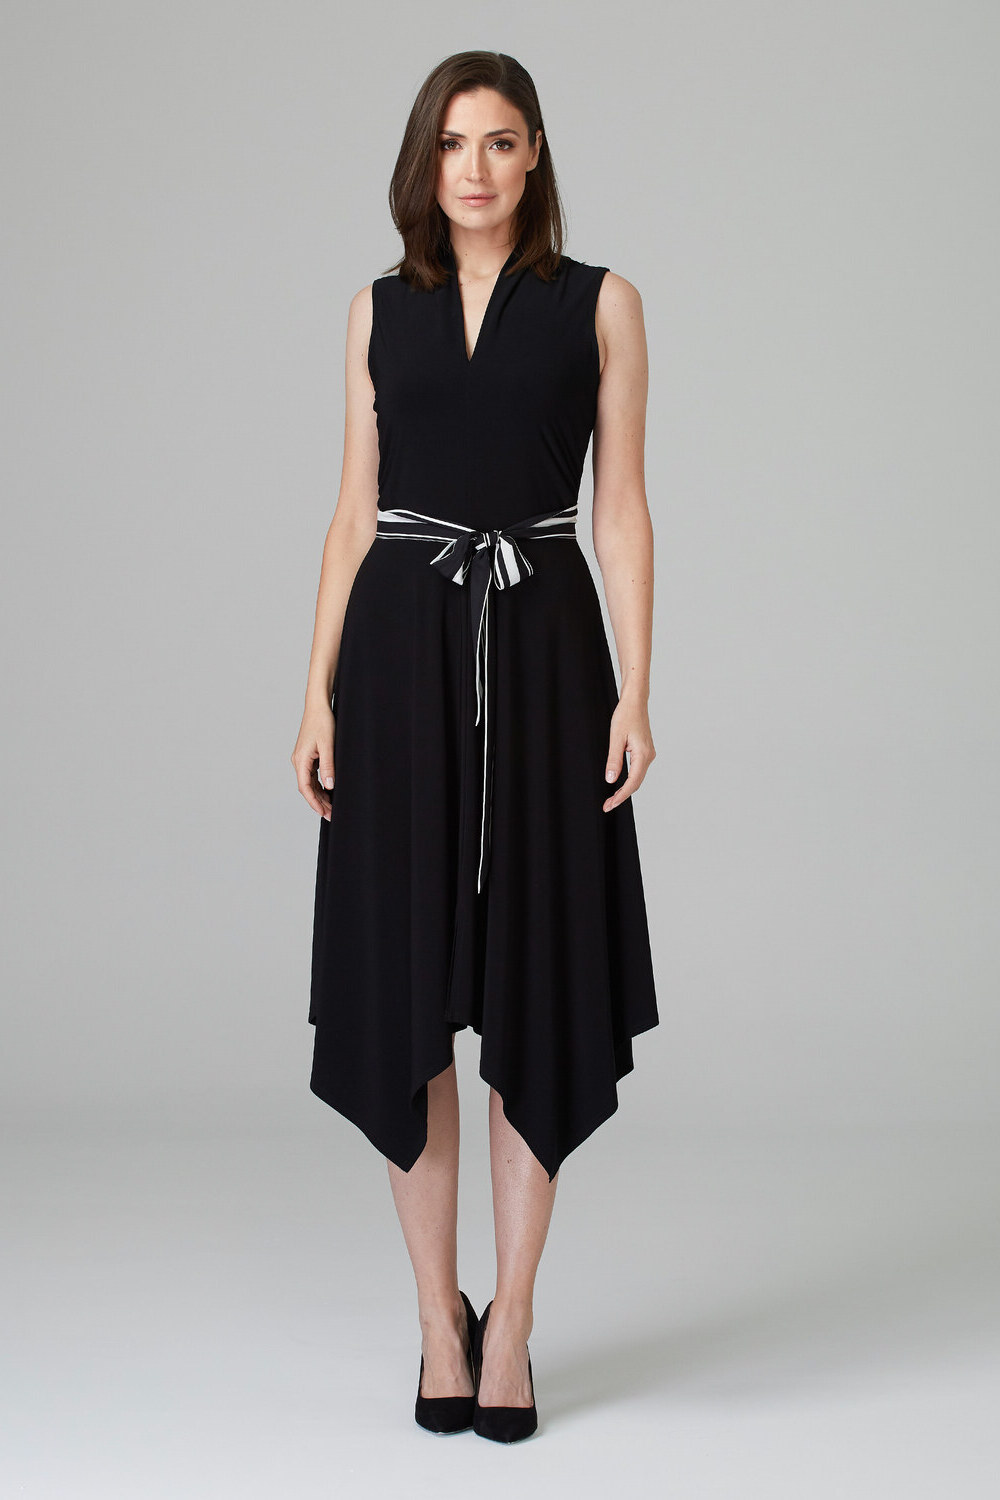 Joseph Ribkoff Dress Style 201457. Black/vanilla